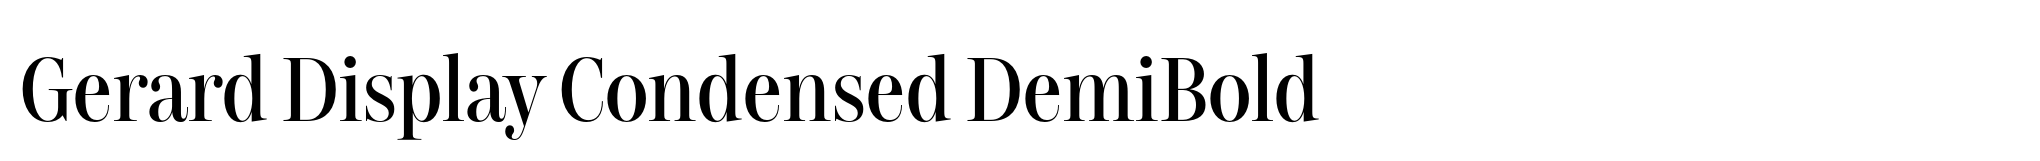 Gerard Display Condensed DemiBold image